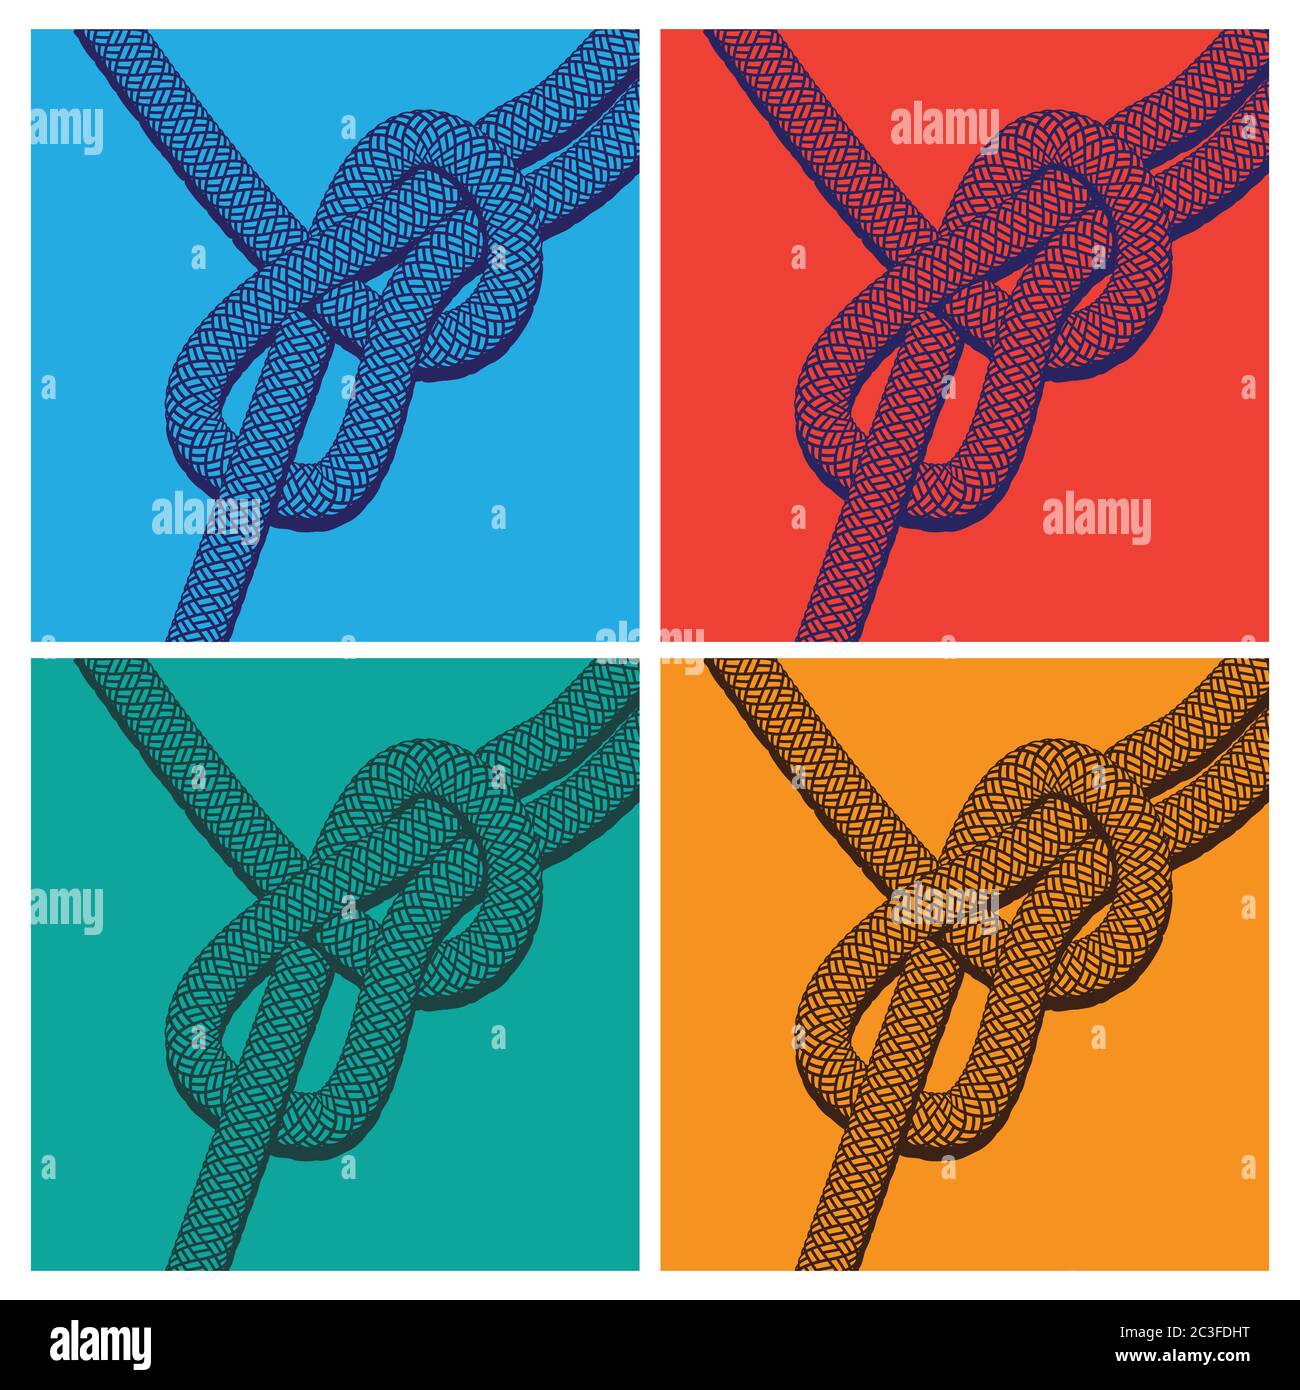 stylized pop art vector illustration of knots Stock Vector